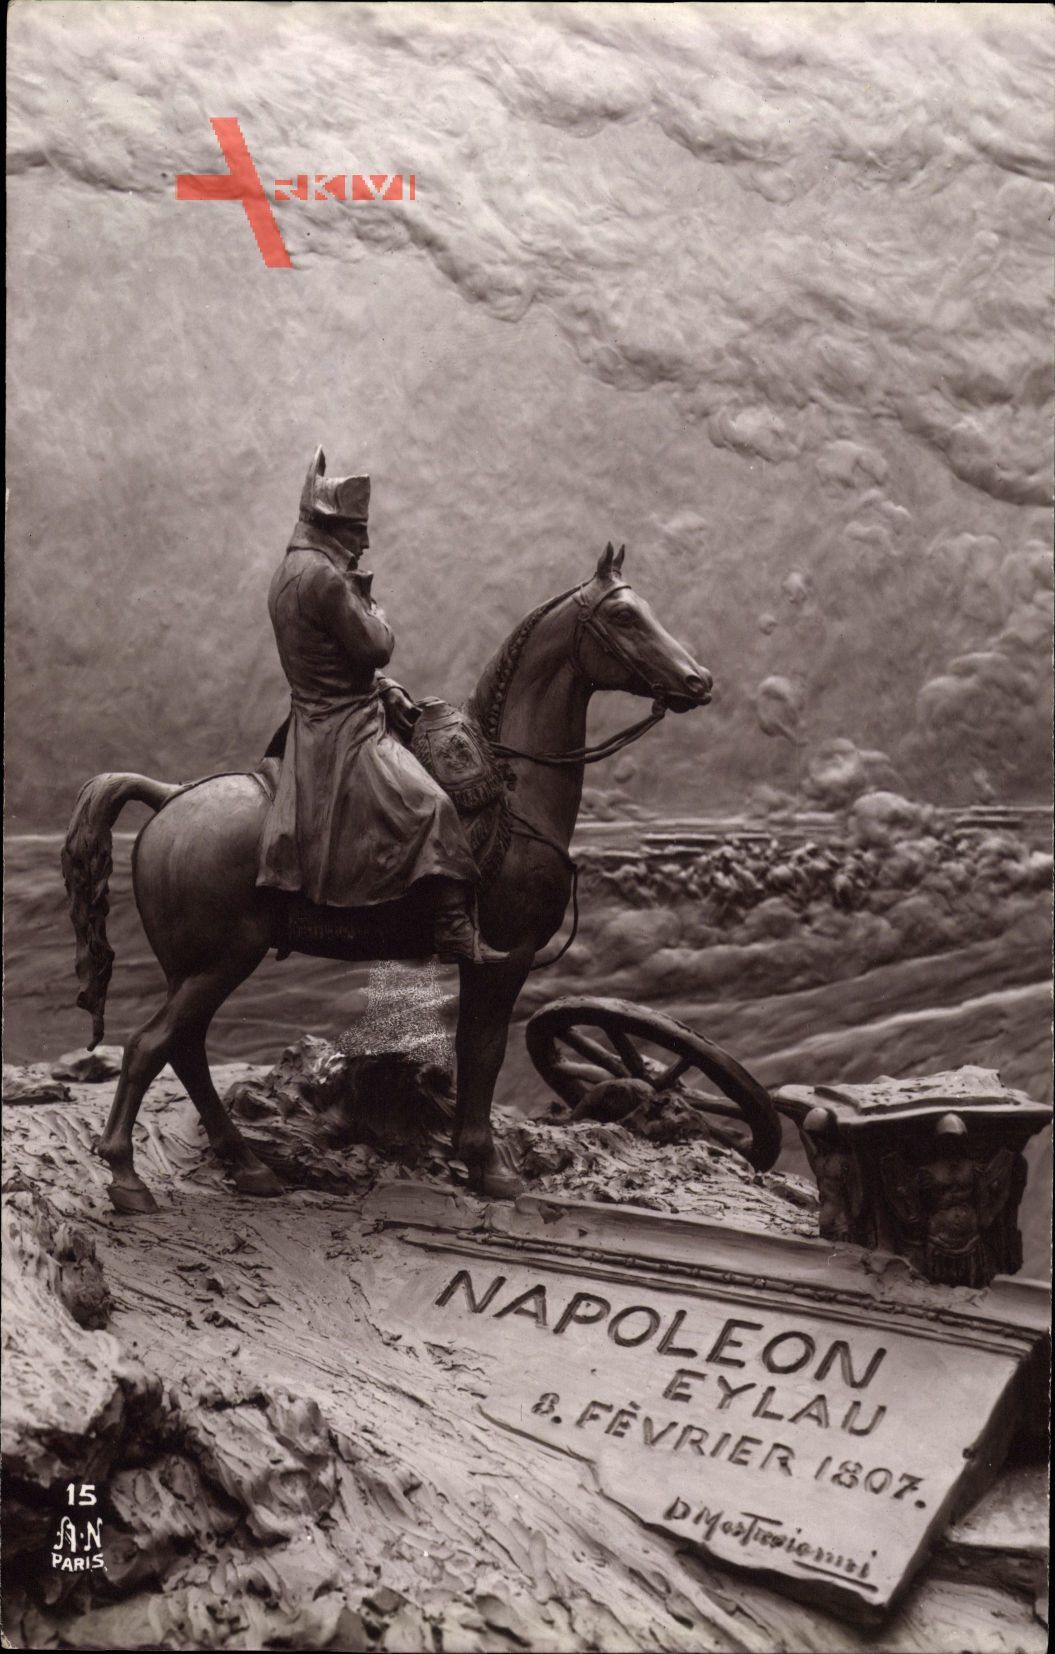 Napoleon Bonaparte, Eylau, 8 Fevrier 1807, Schlachtfeld